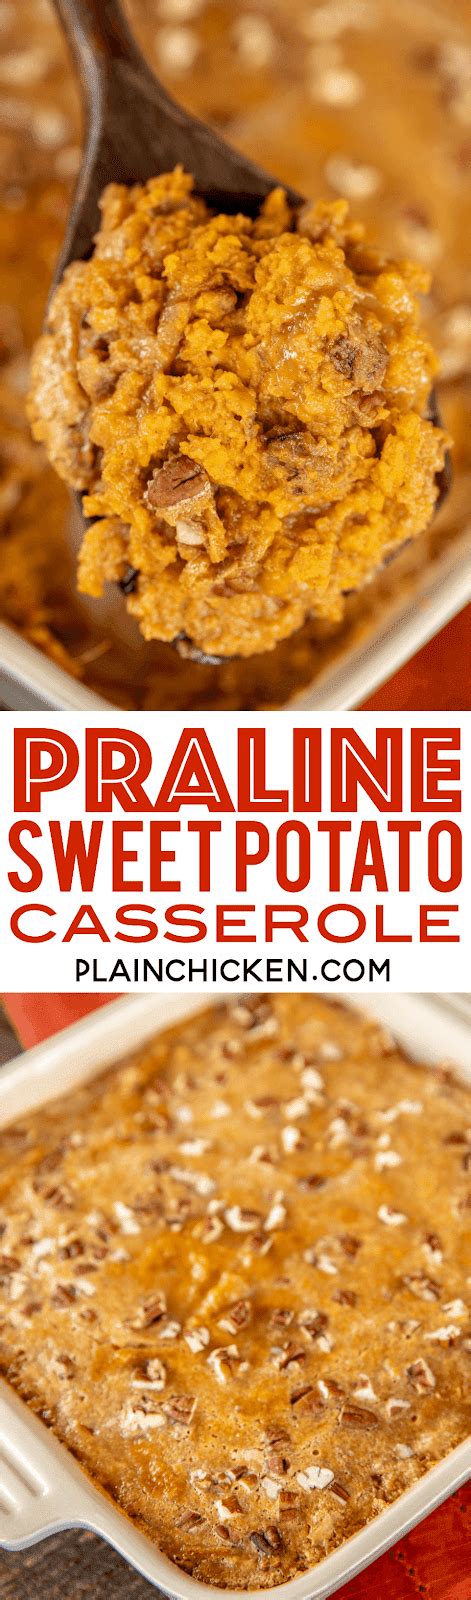 Praline Sweet Potato Casserole Our New Favorite Sweet Potato